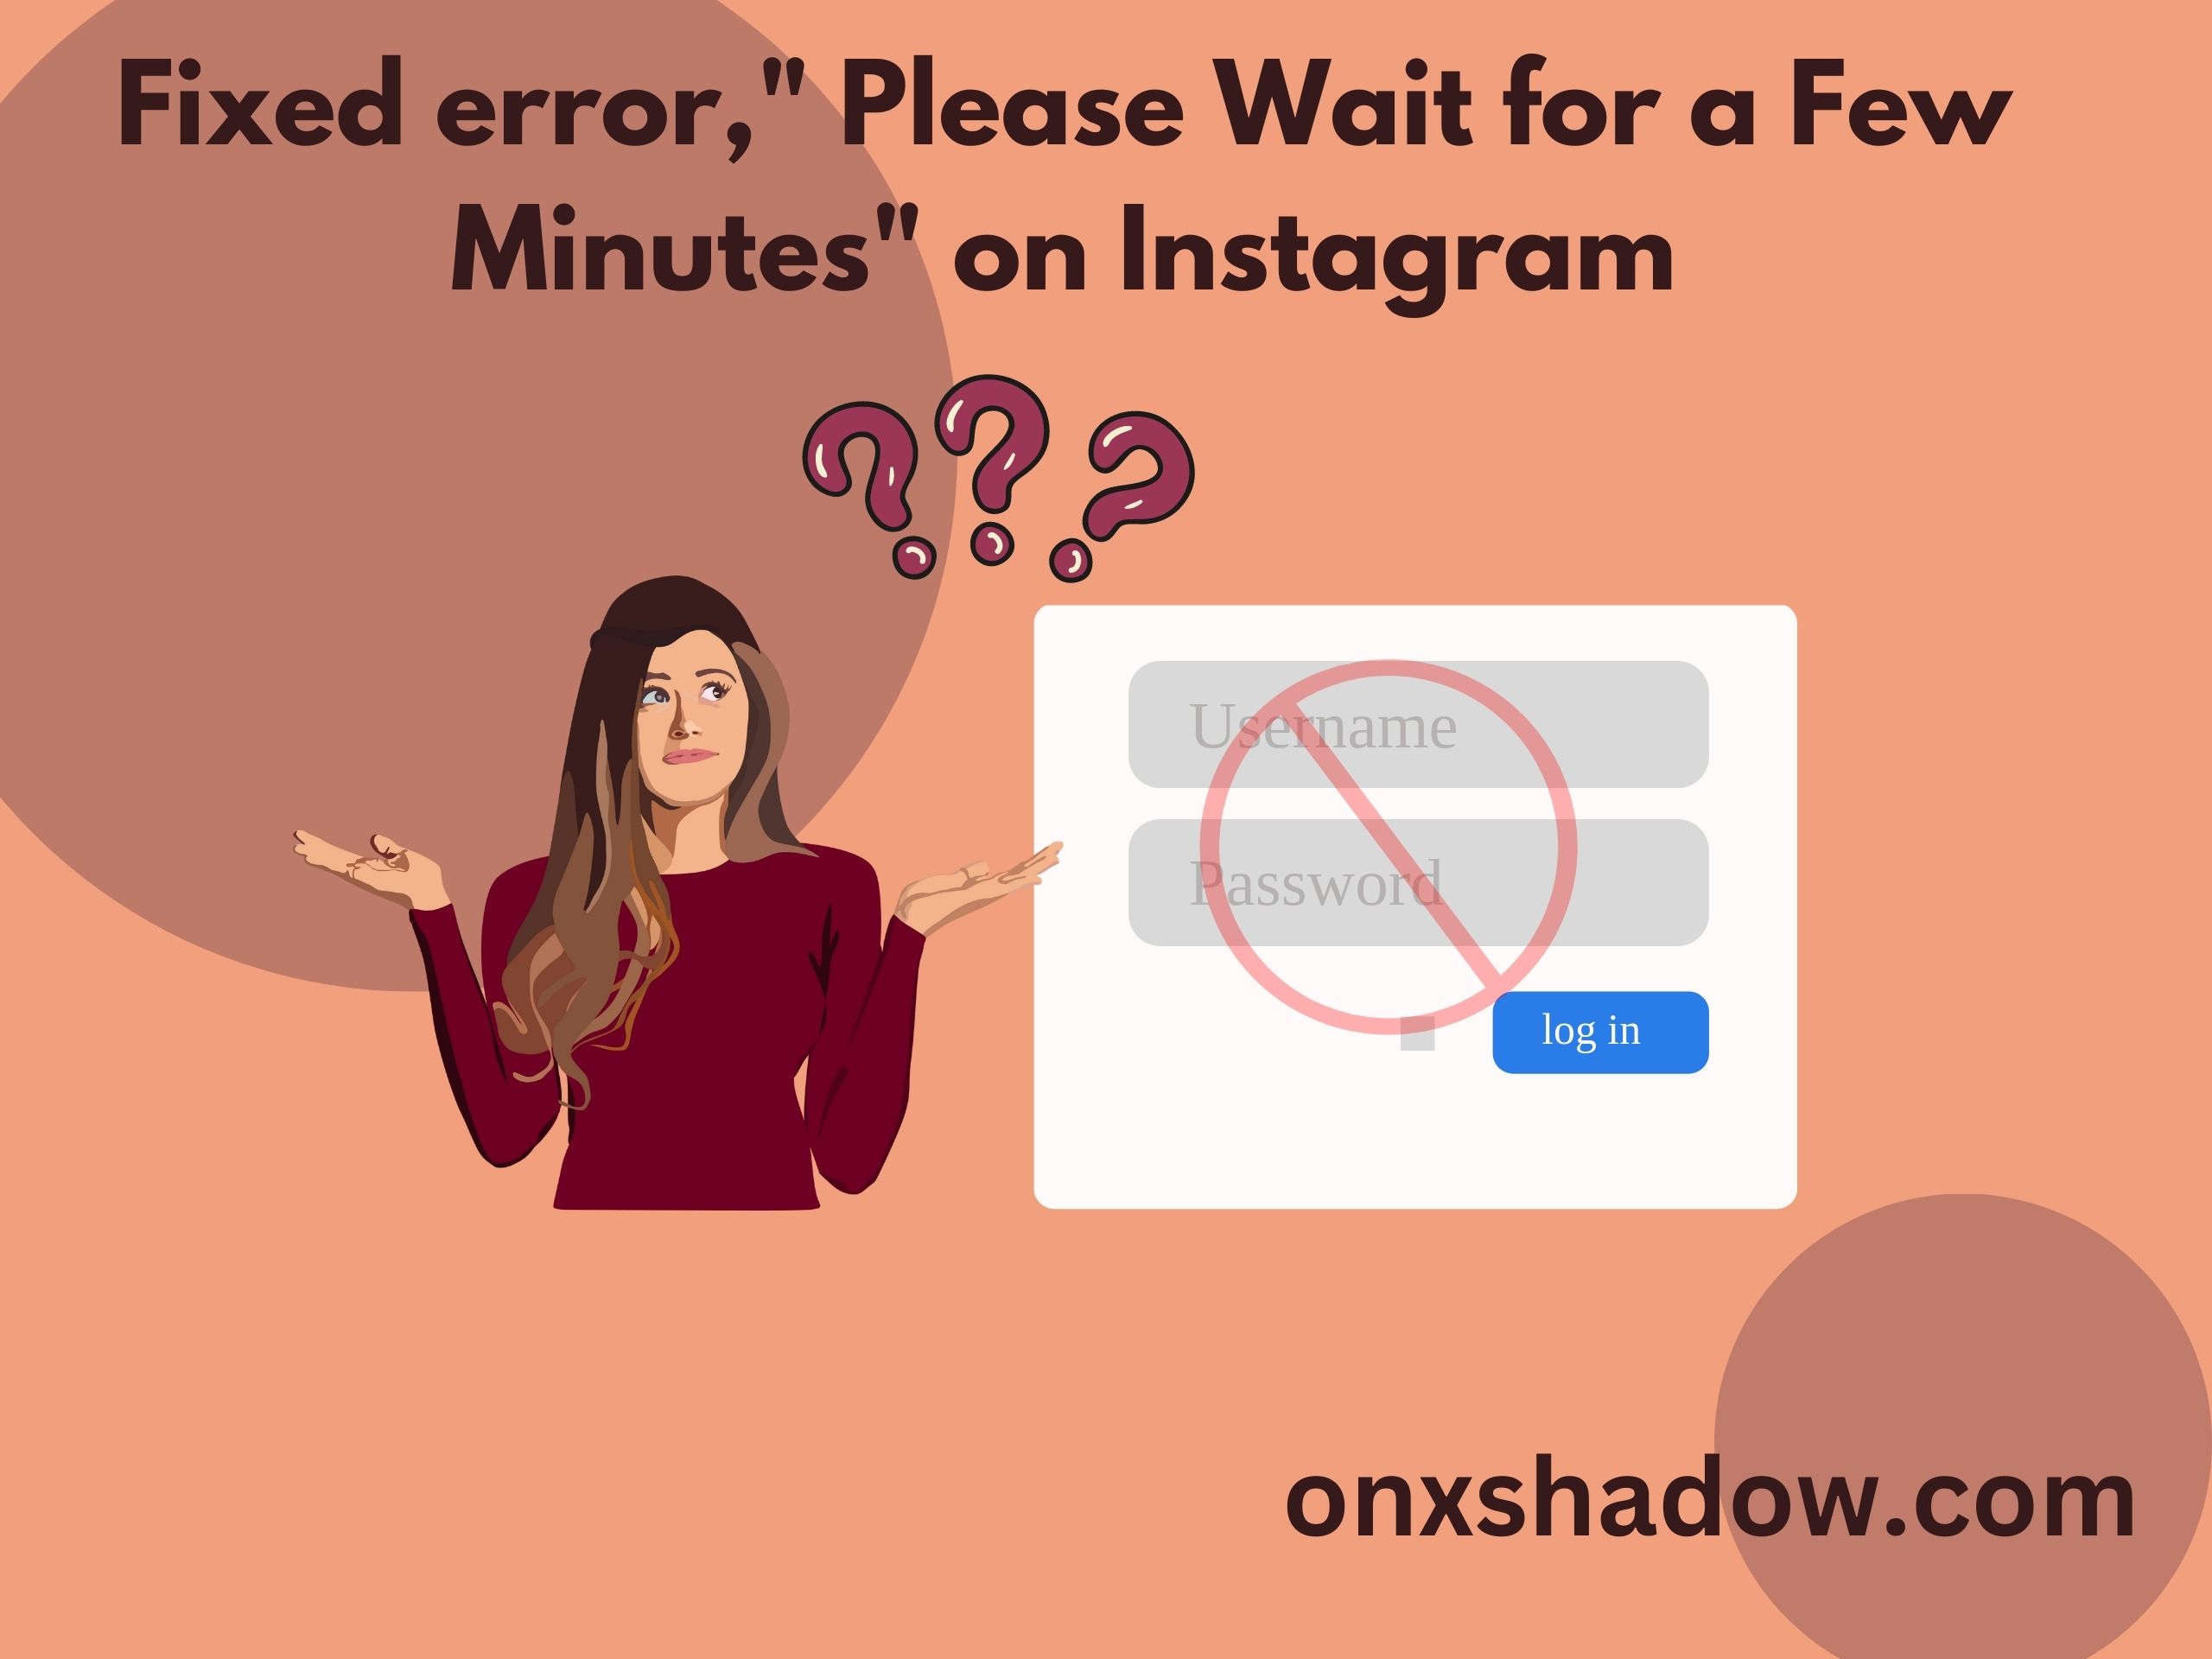 Fixed error," Please Wait for a Few Minutes" on Instagram